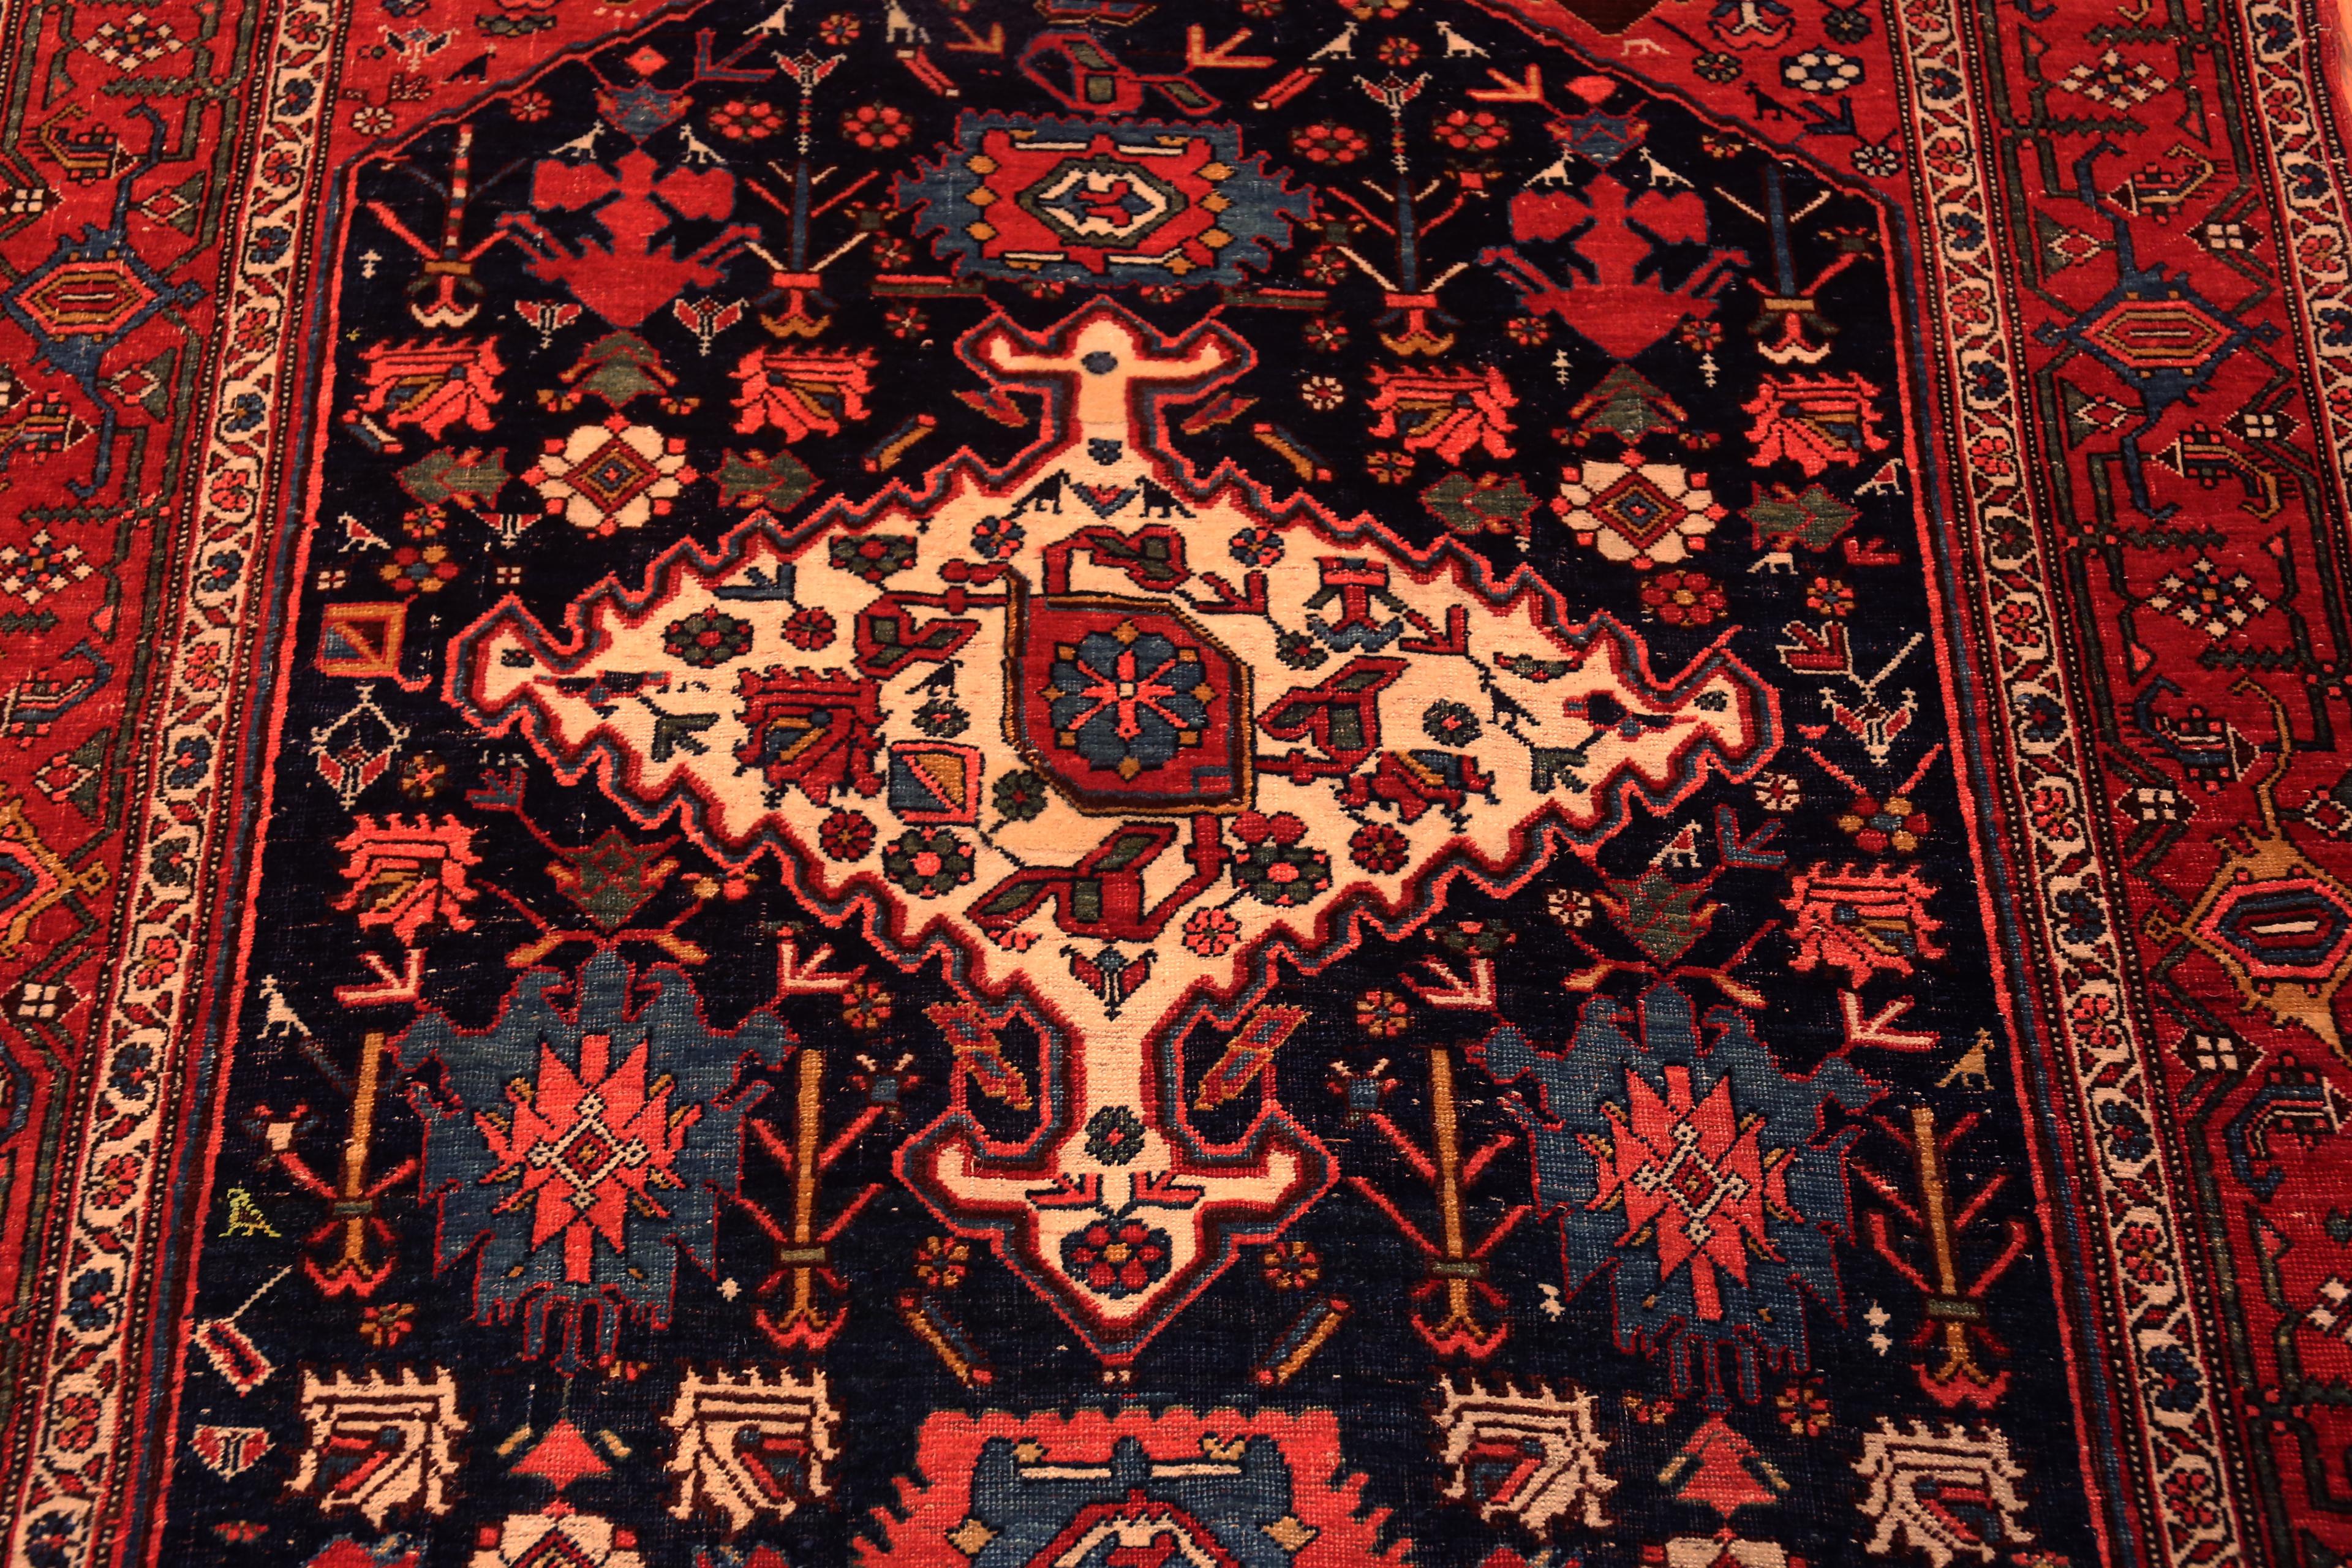 Hand-Knotted Stunning Small Antique Tribal Harshang Design Persian Bidjar Area Rug 4'6